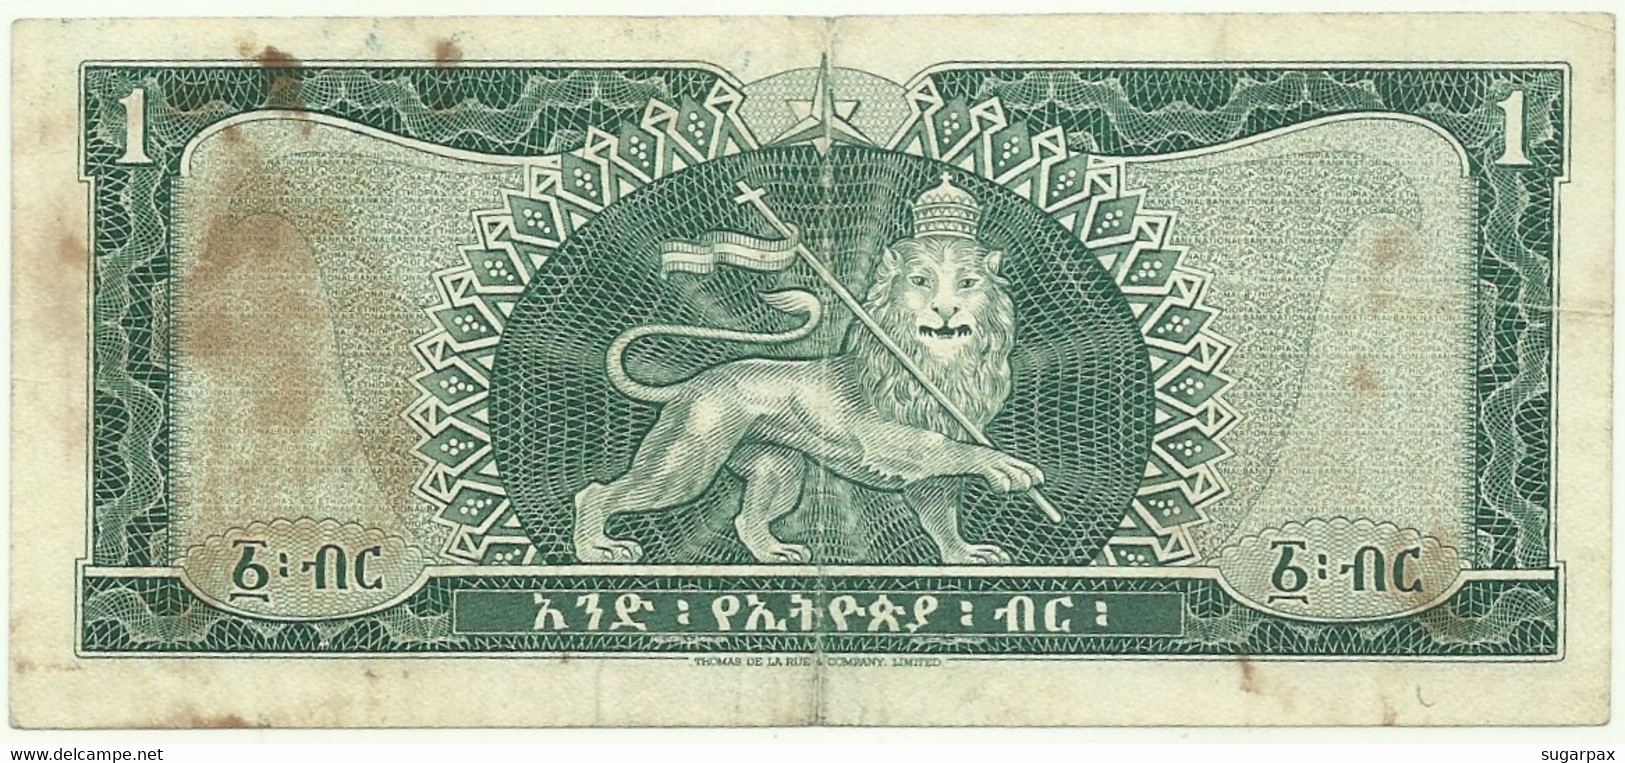 Ethiopia - 1 Dollar - ND ( 1966 ) - Pick 25 - Serie ER - Ethiopia